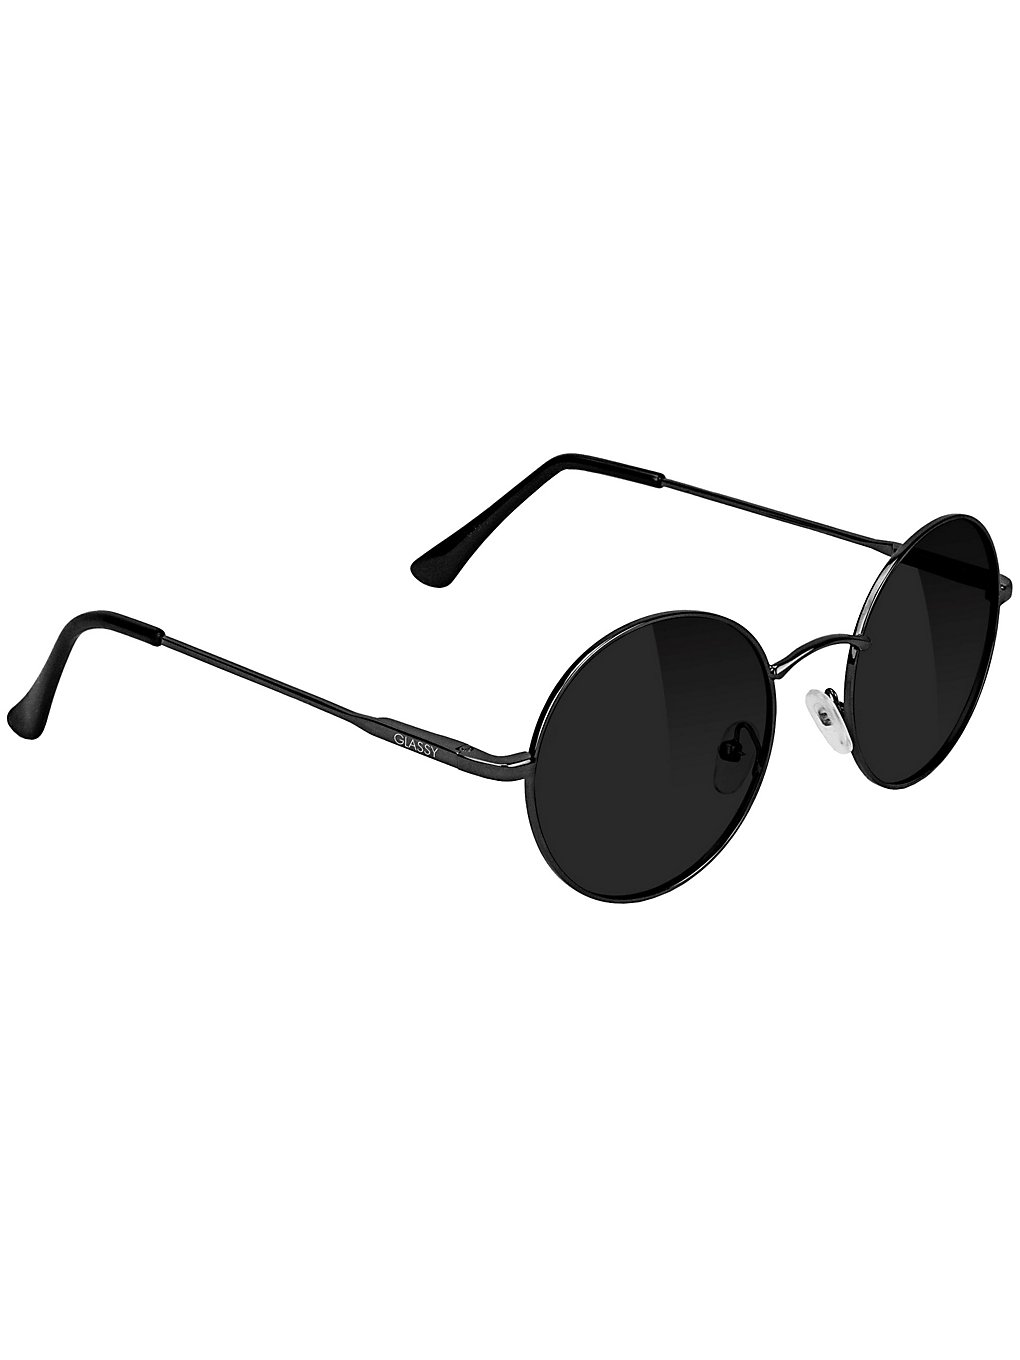 Image of Glassy Mayfair Premium Polarized Black Occhiali da Sole nero